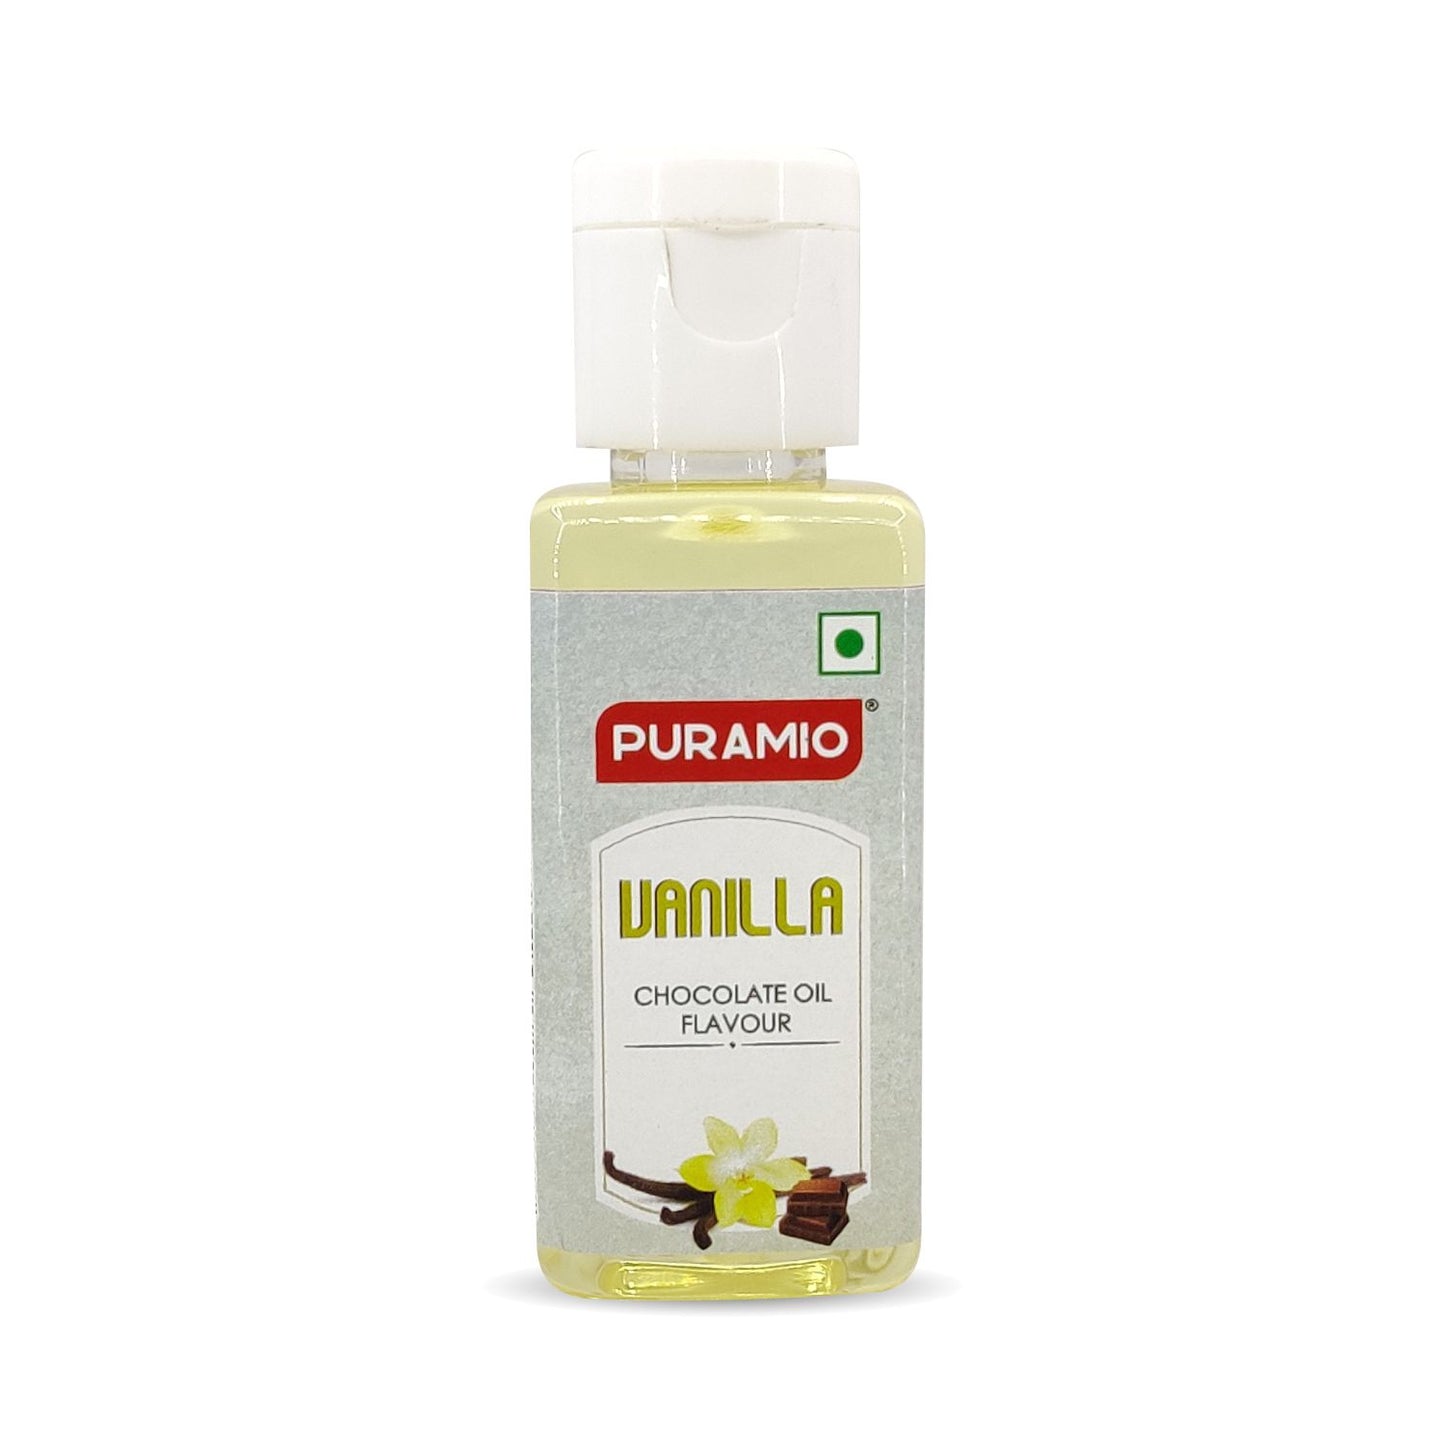 Puramio Chocolate Oil Flavour - Vanilla